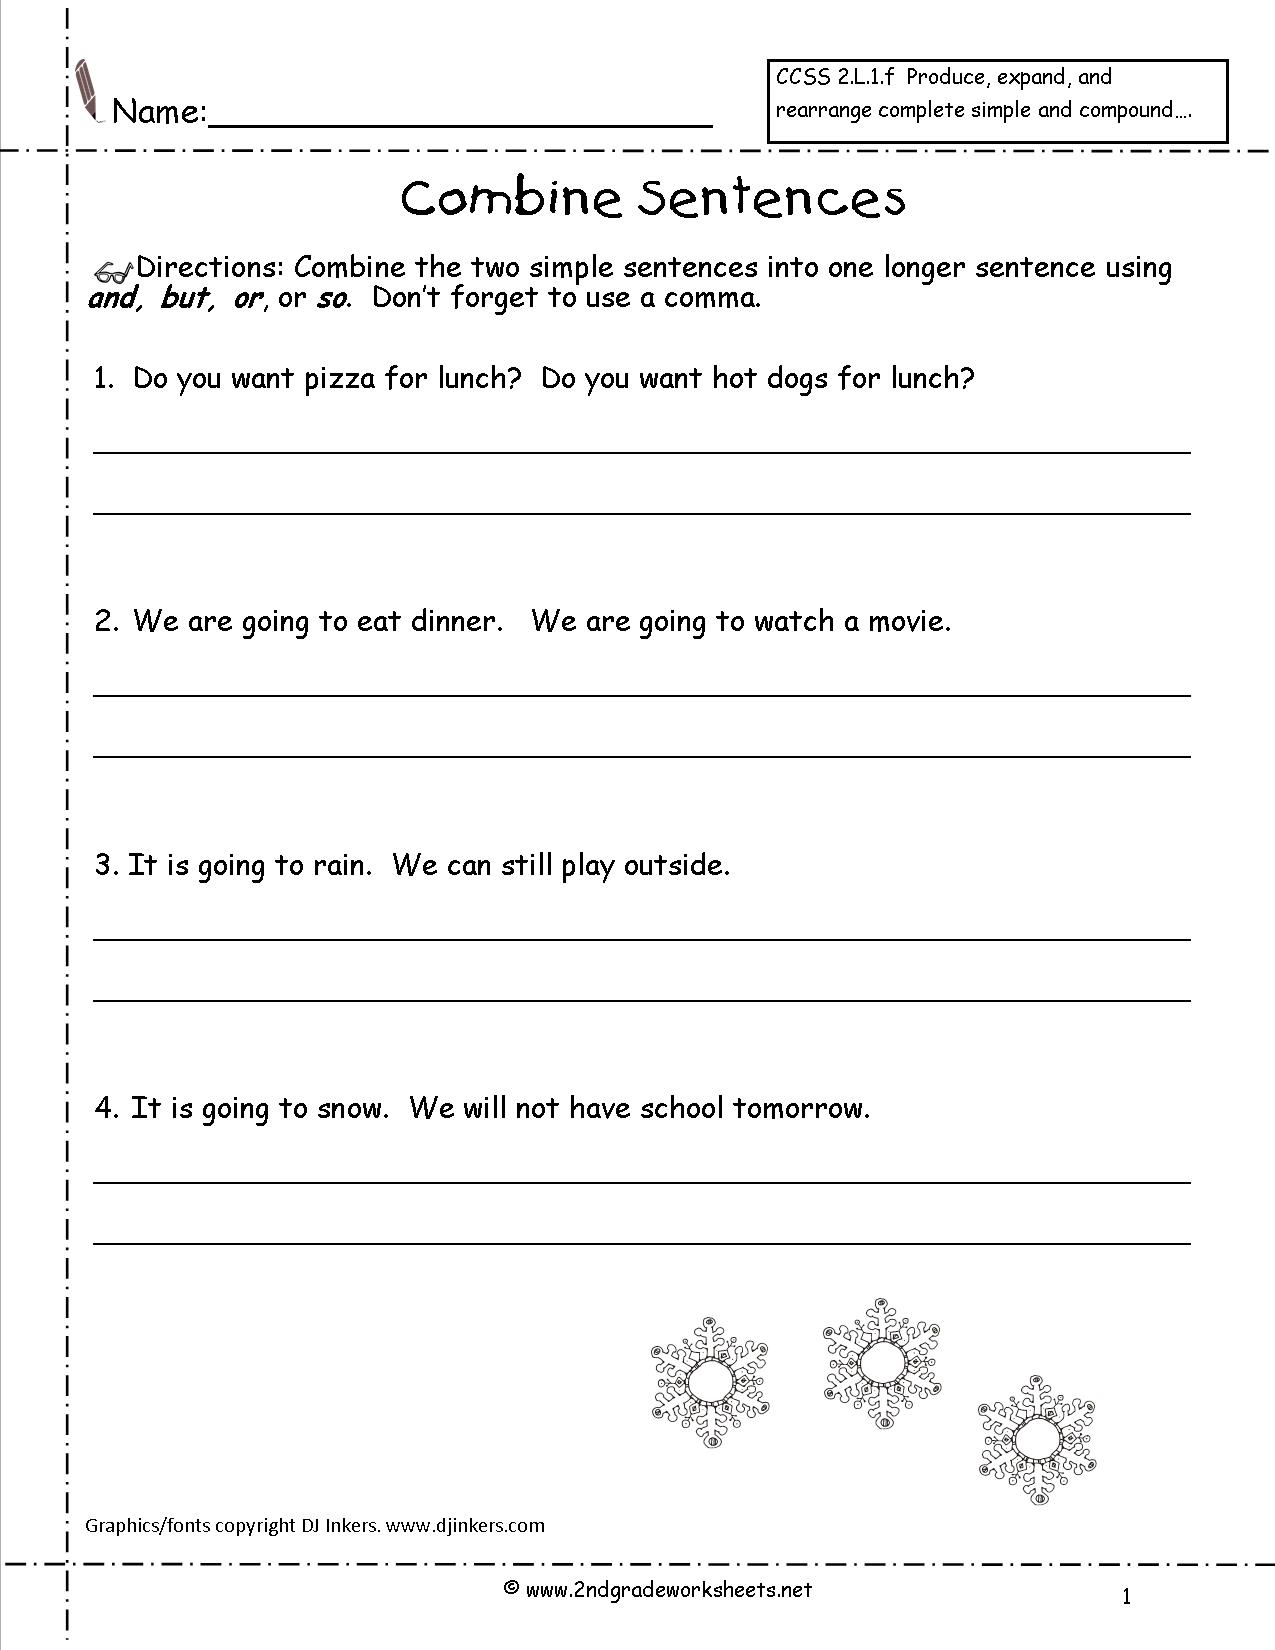 11 Best Images of Types Of Sentences Worksheet 2nd Grade - Combining